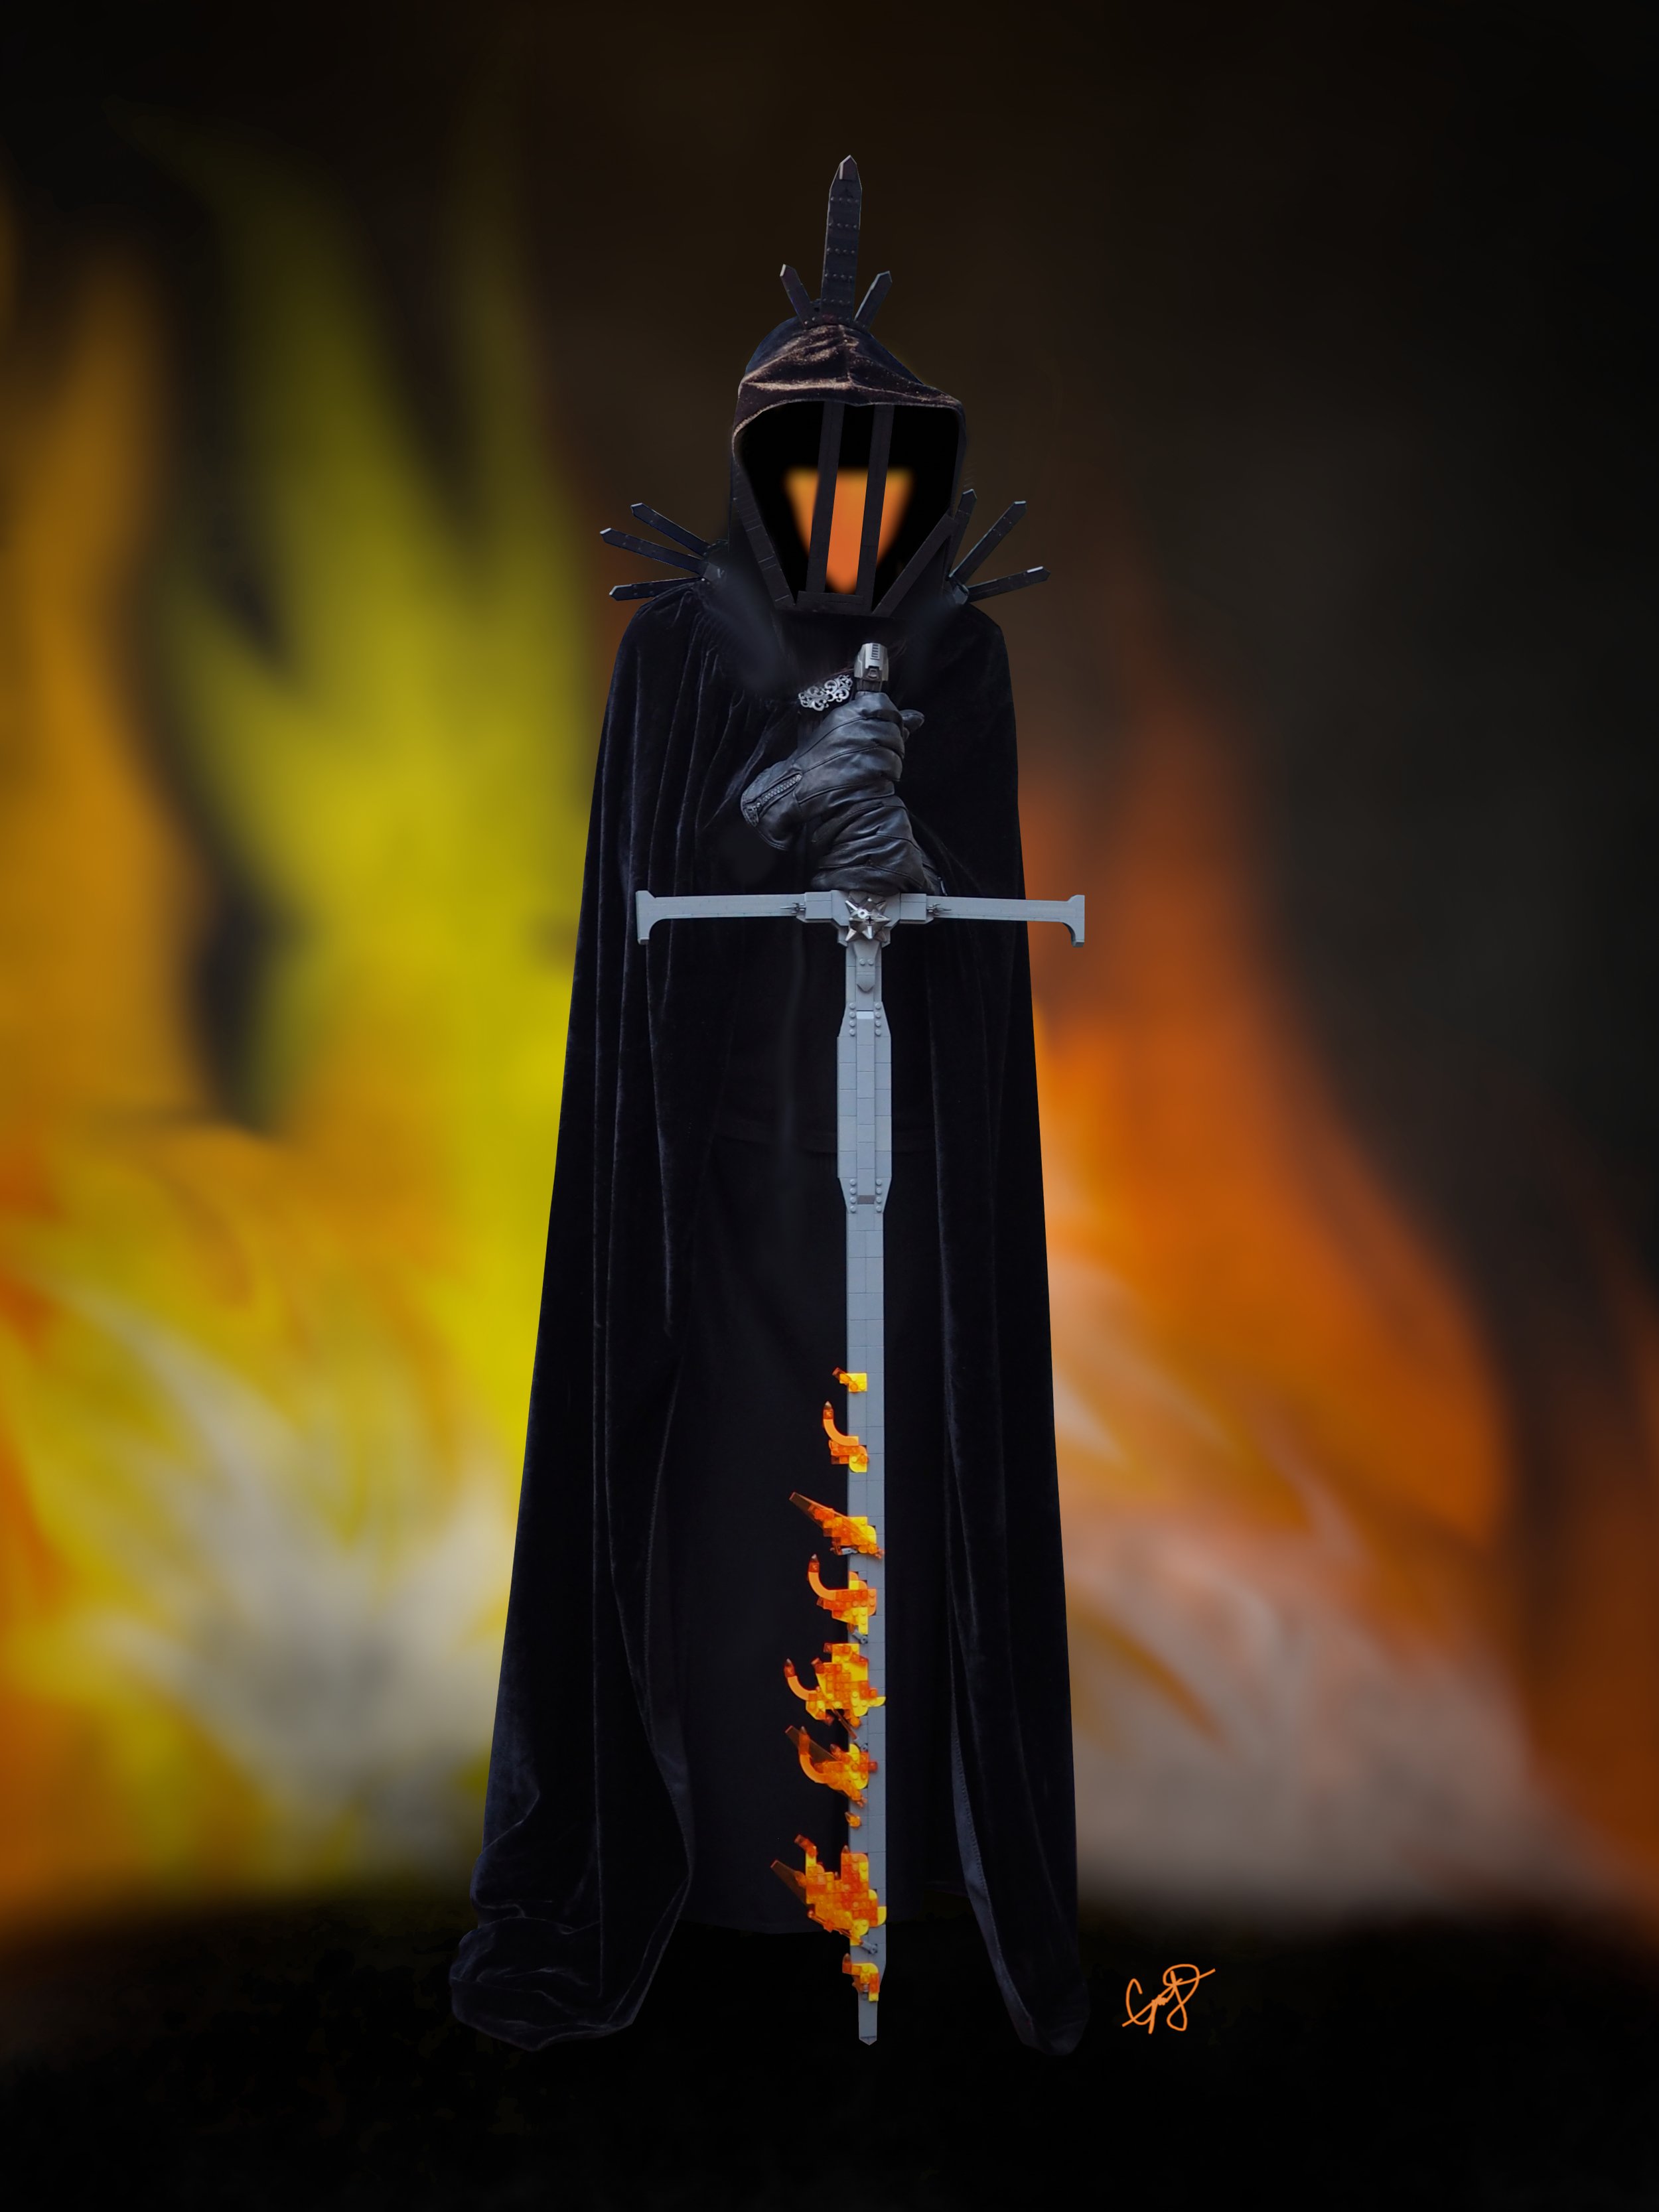  Flaming Sword, by  Geneva D  